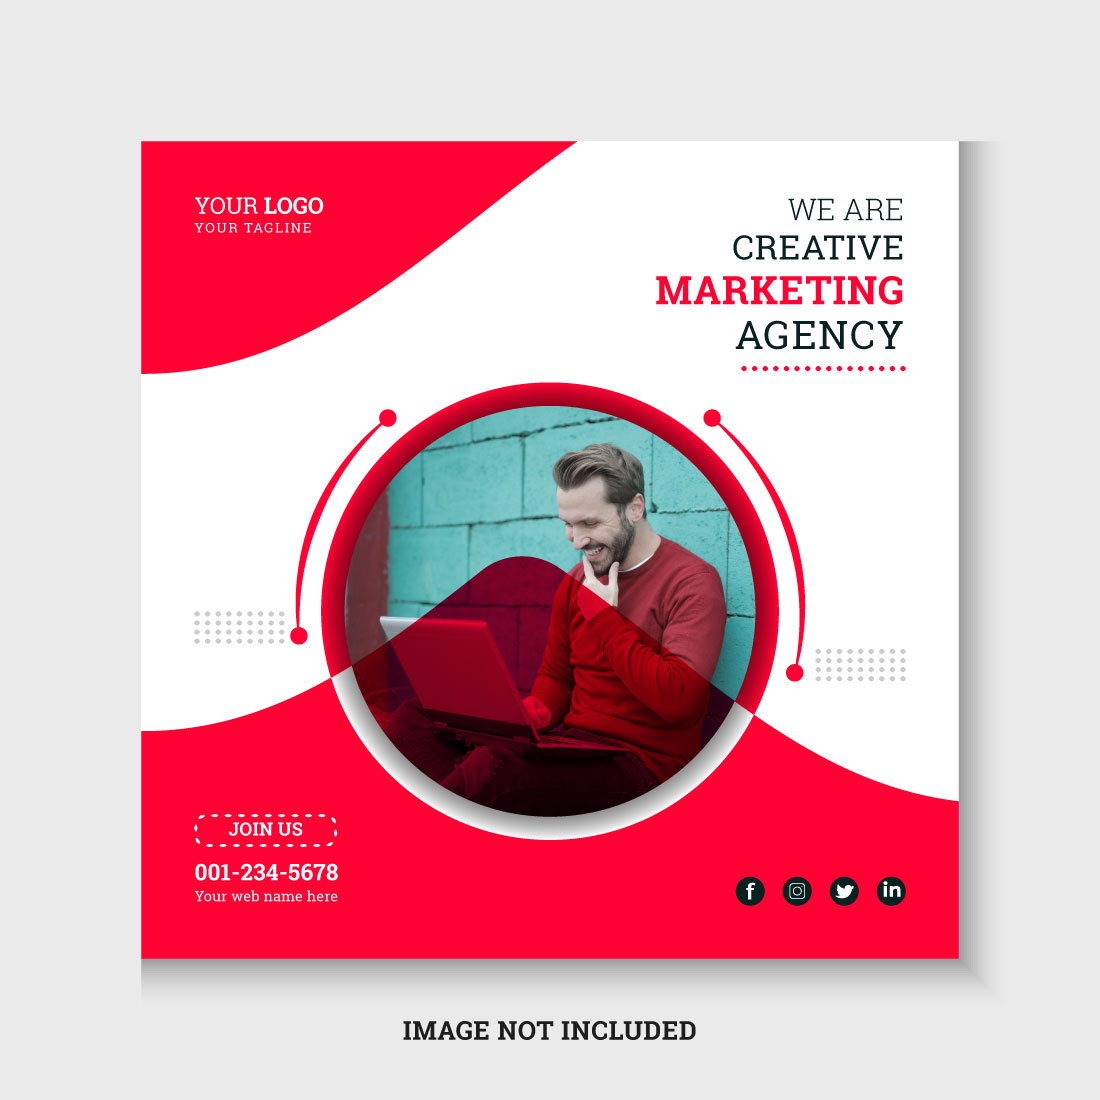 Digital marketing agency social media and instagram post cover image.